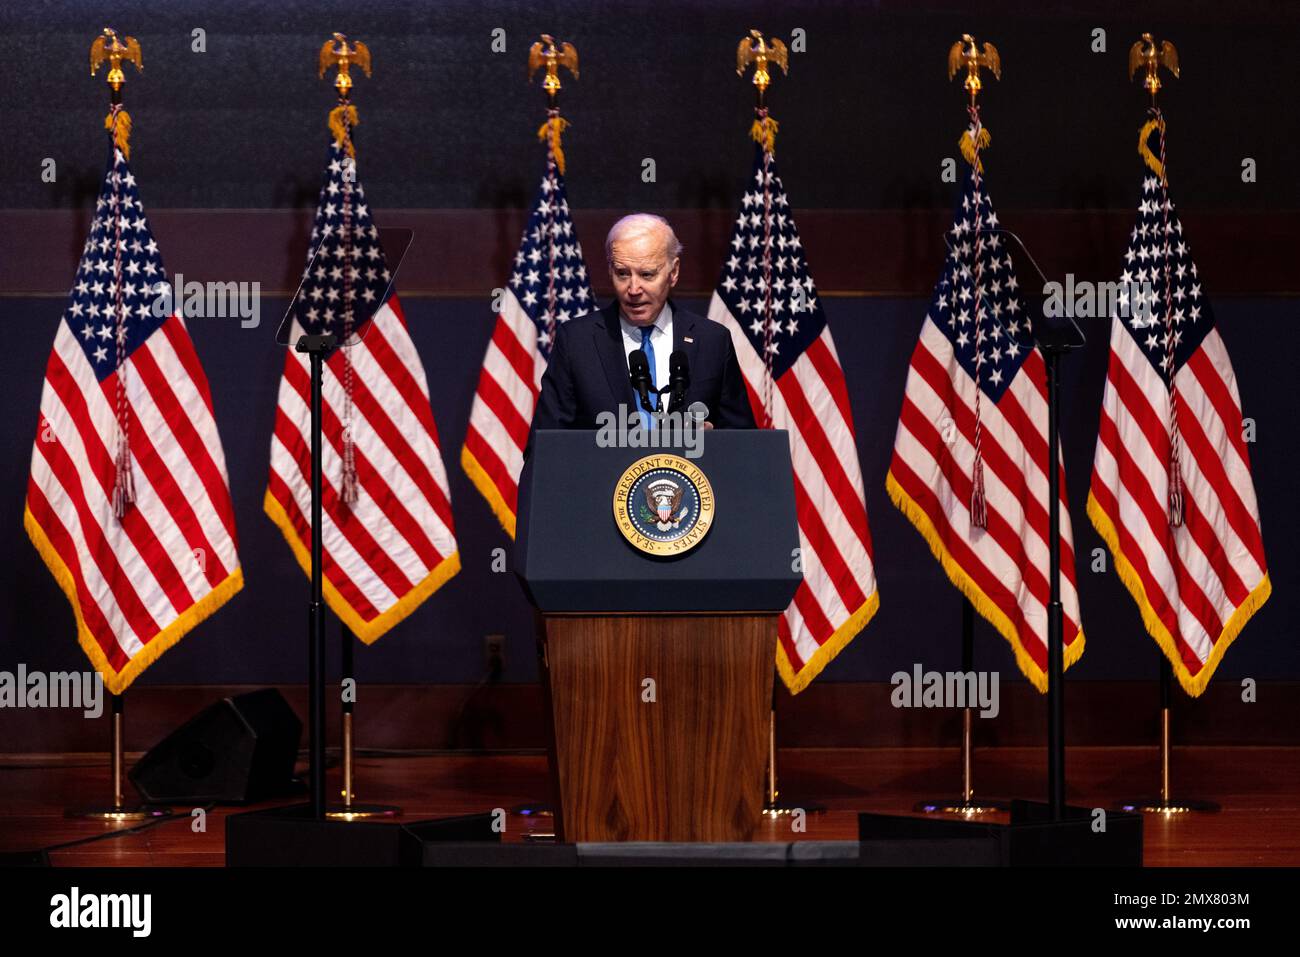 United States President Joe Biden speaks during the National Prayer Breakfast at the Capitol in Washington, DC, Thursday, Feb. 2, 2023. Credit: Julia Nikhinson/CNP /MediaPunch Stock Photo